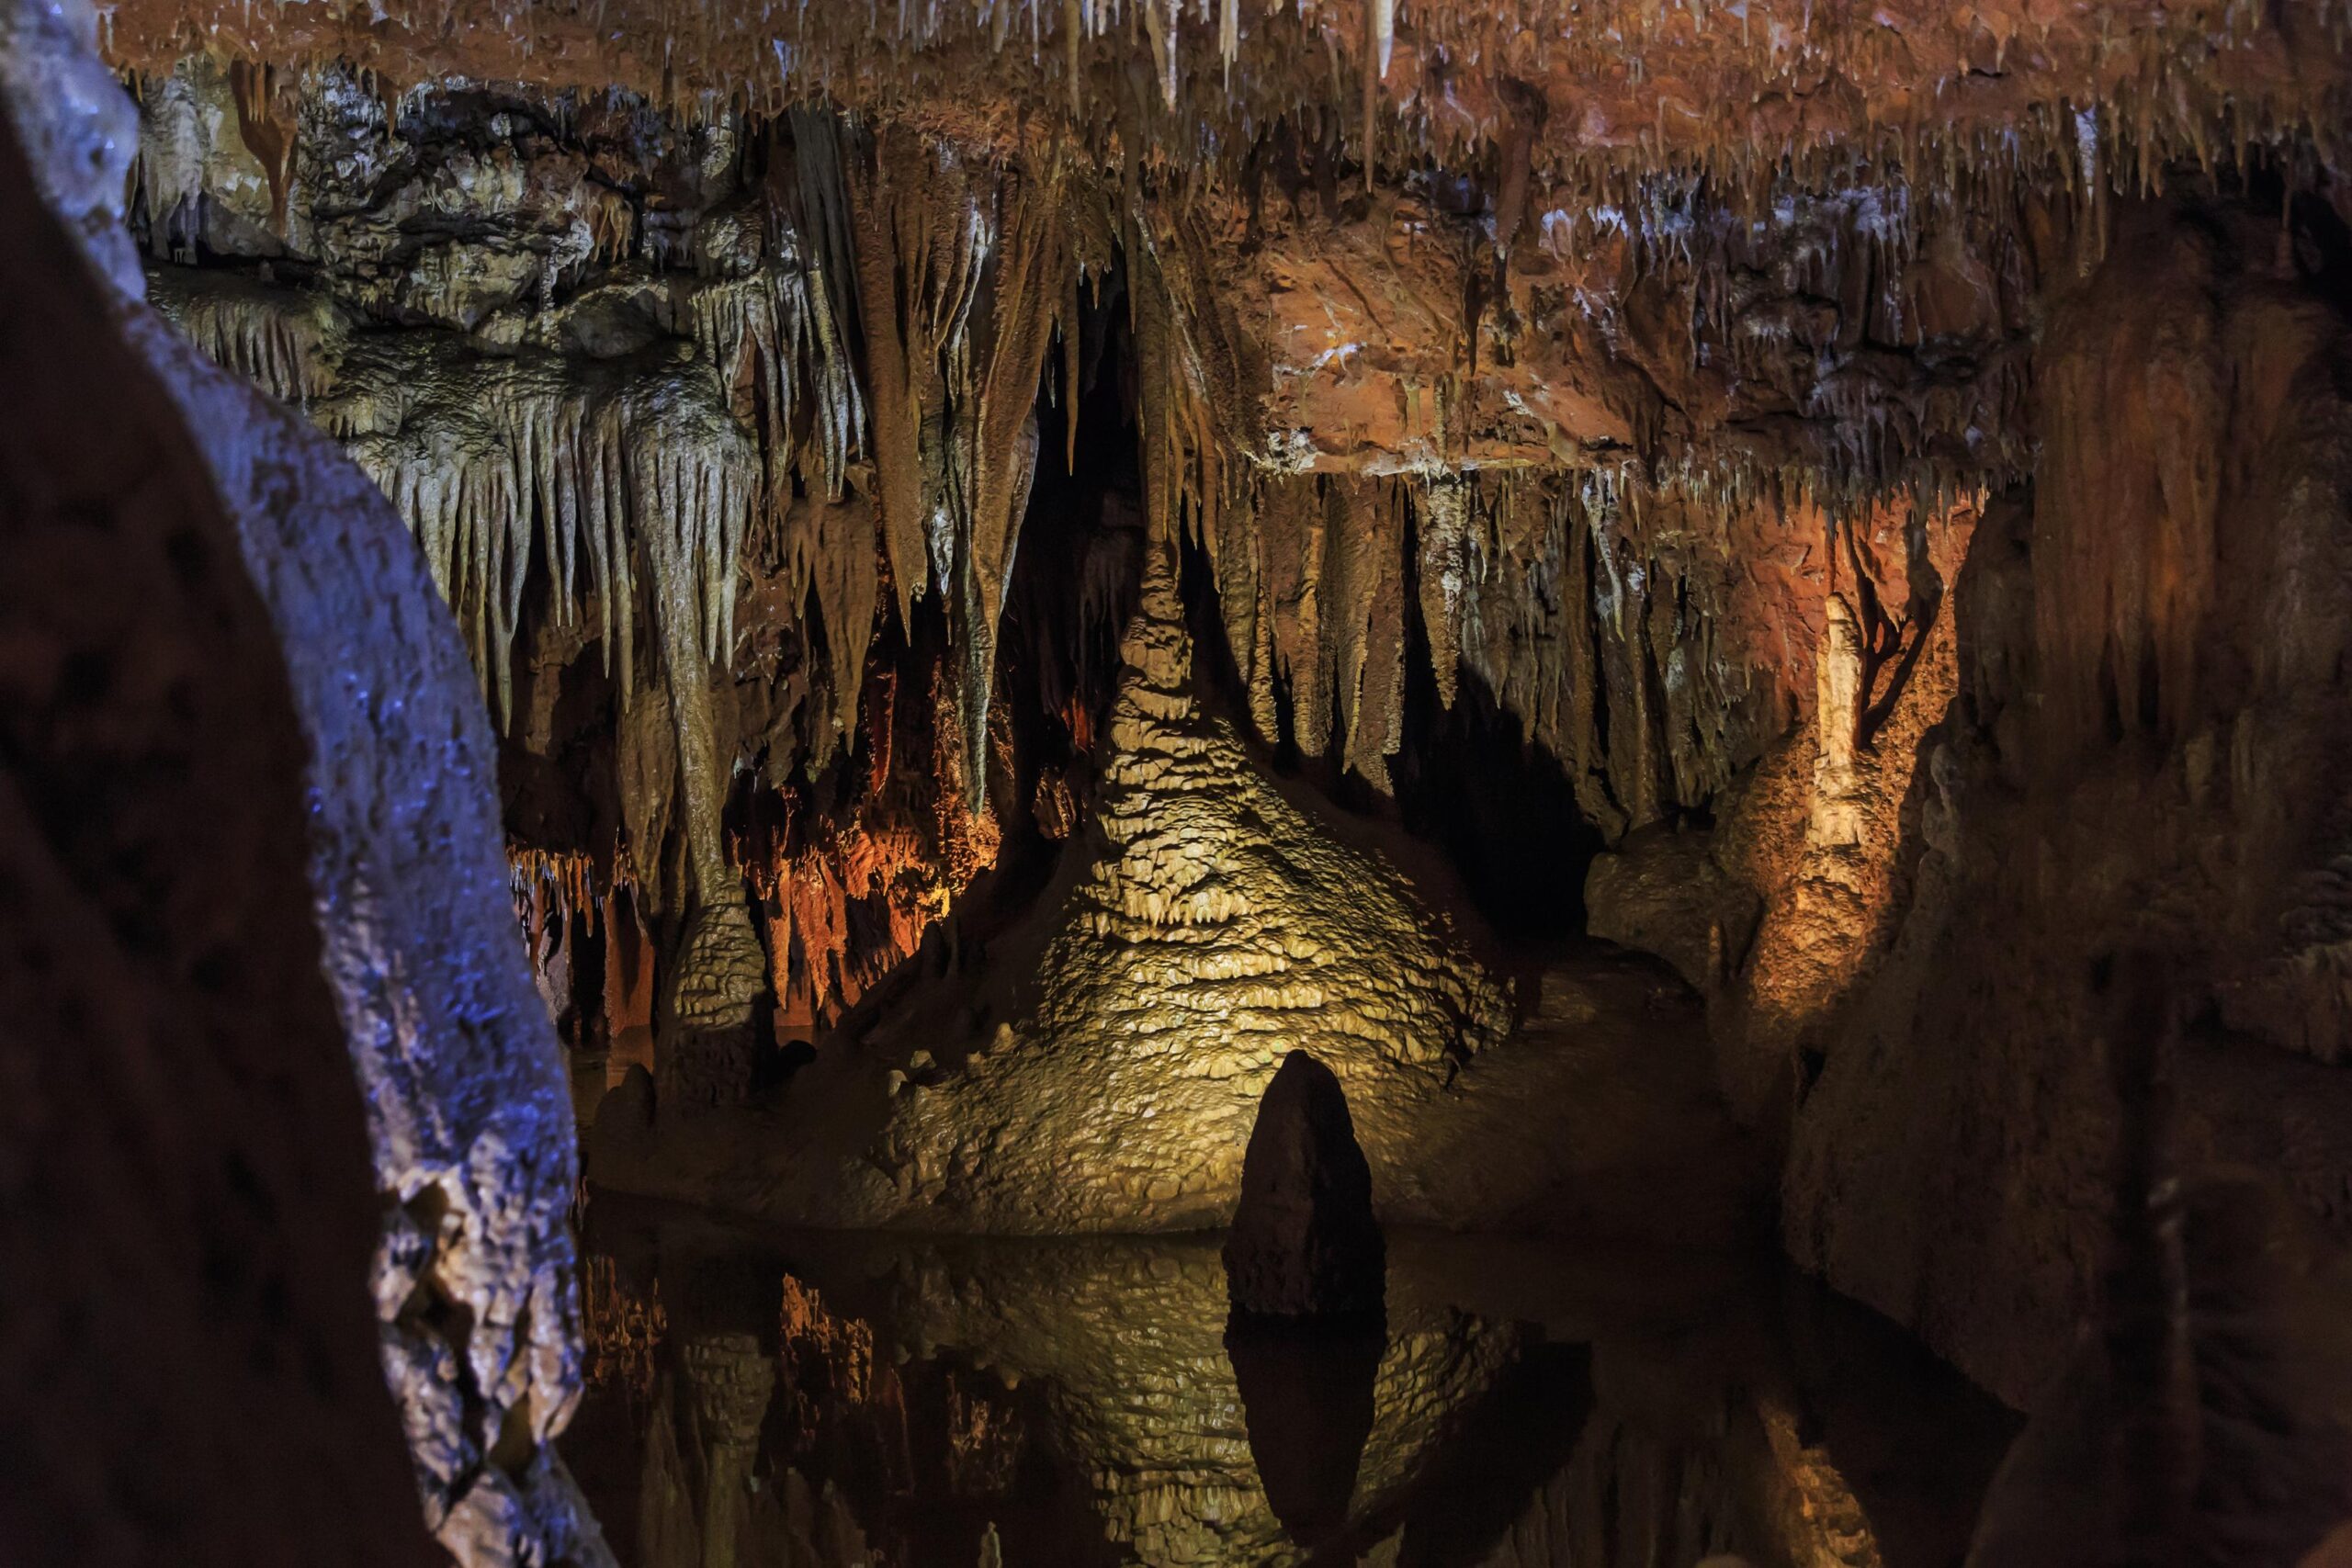 Baredine Cave in Croatia